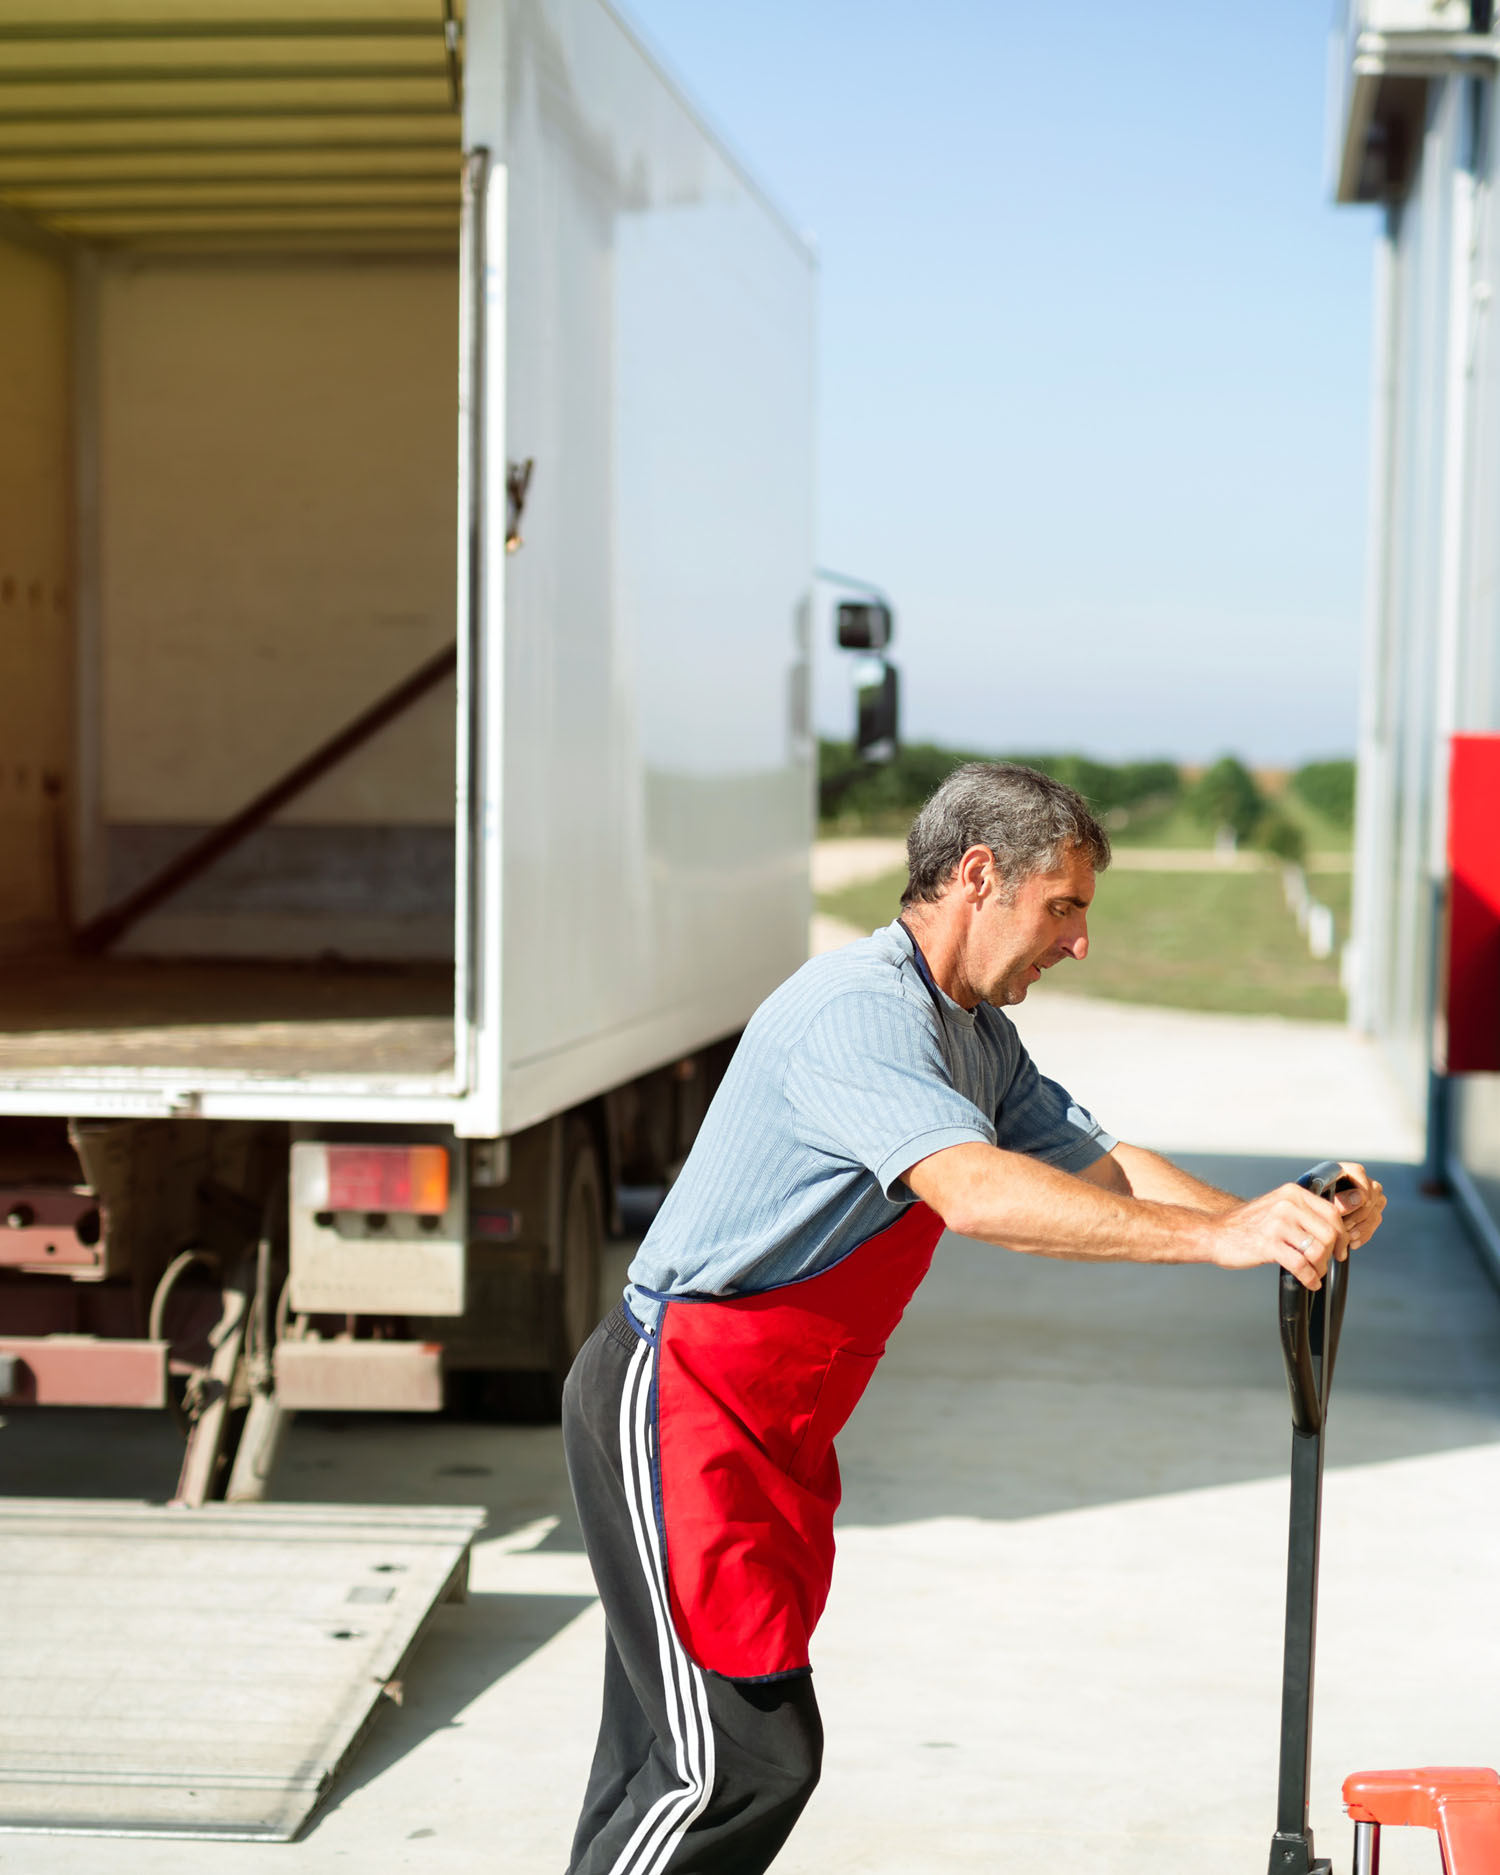 Box Truck Insurance Texas